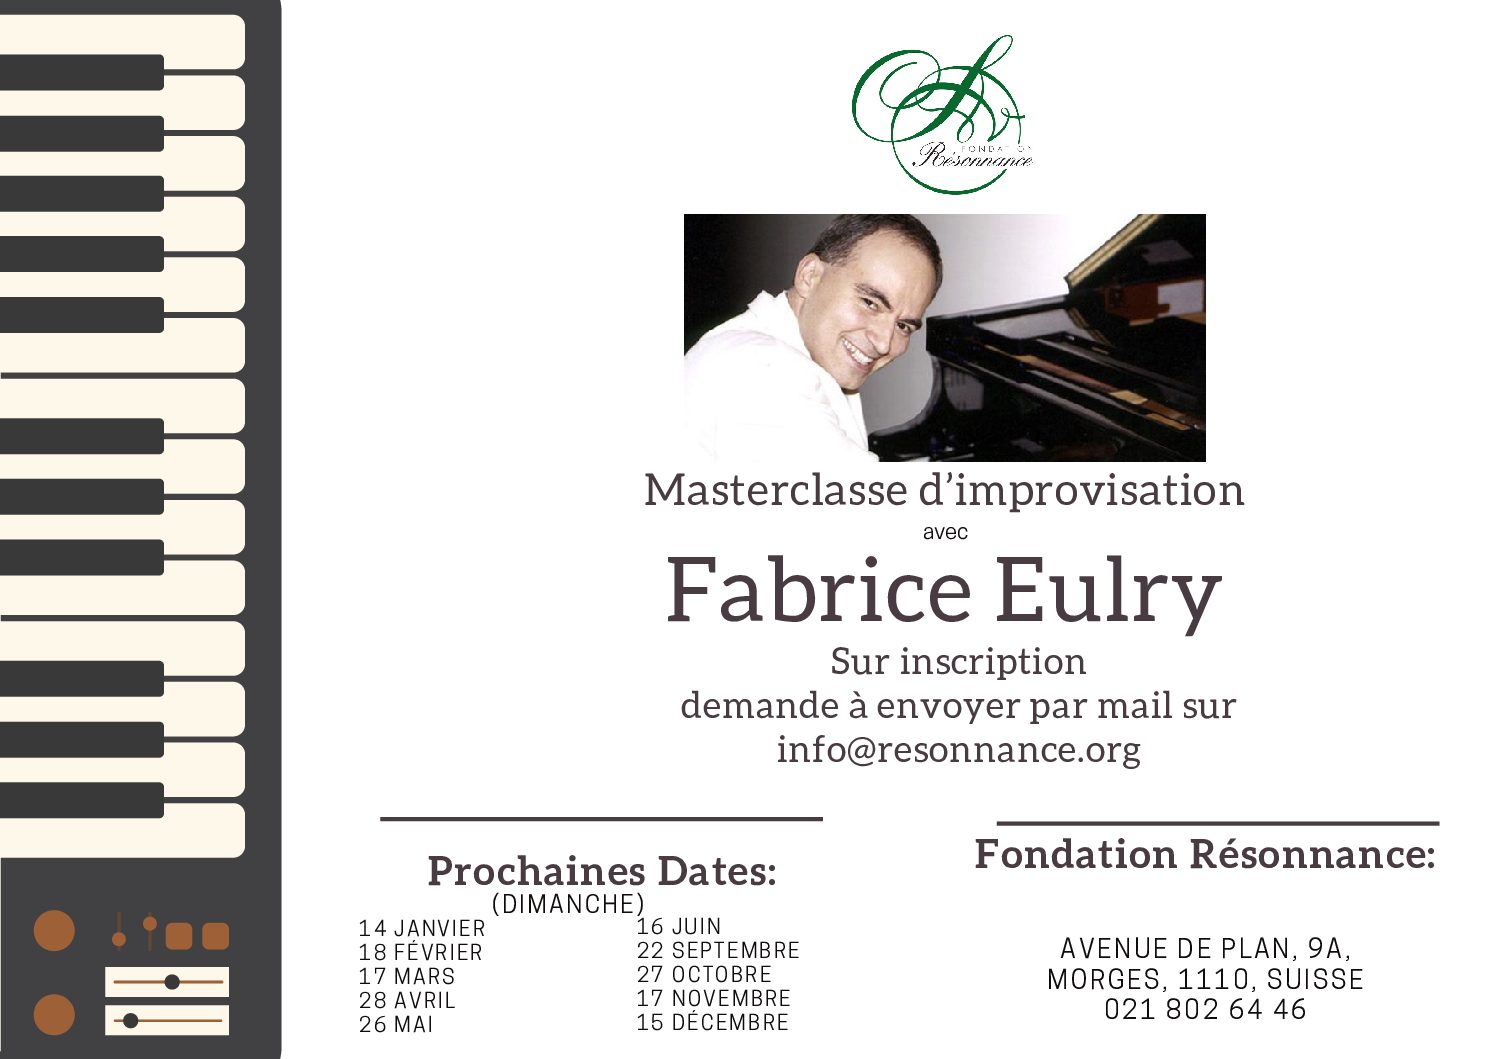 Masterclasse d'improvisation avec Fabrice Eulry